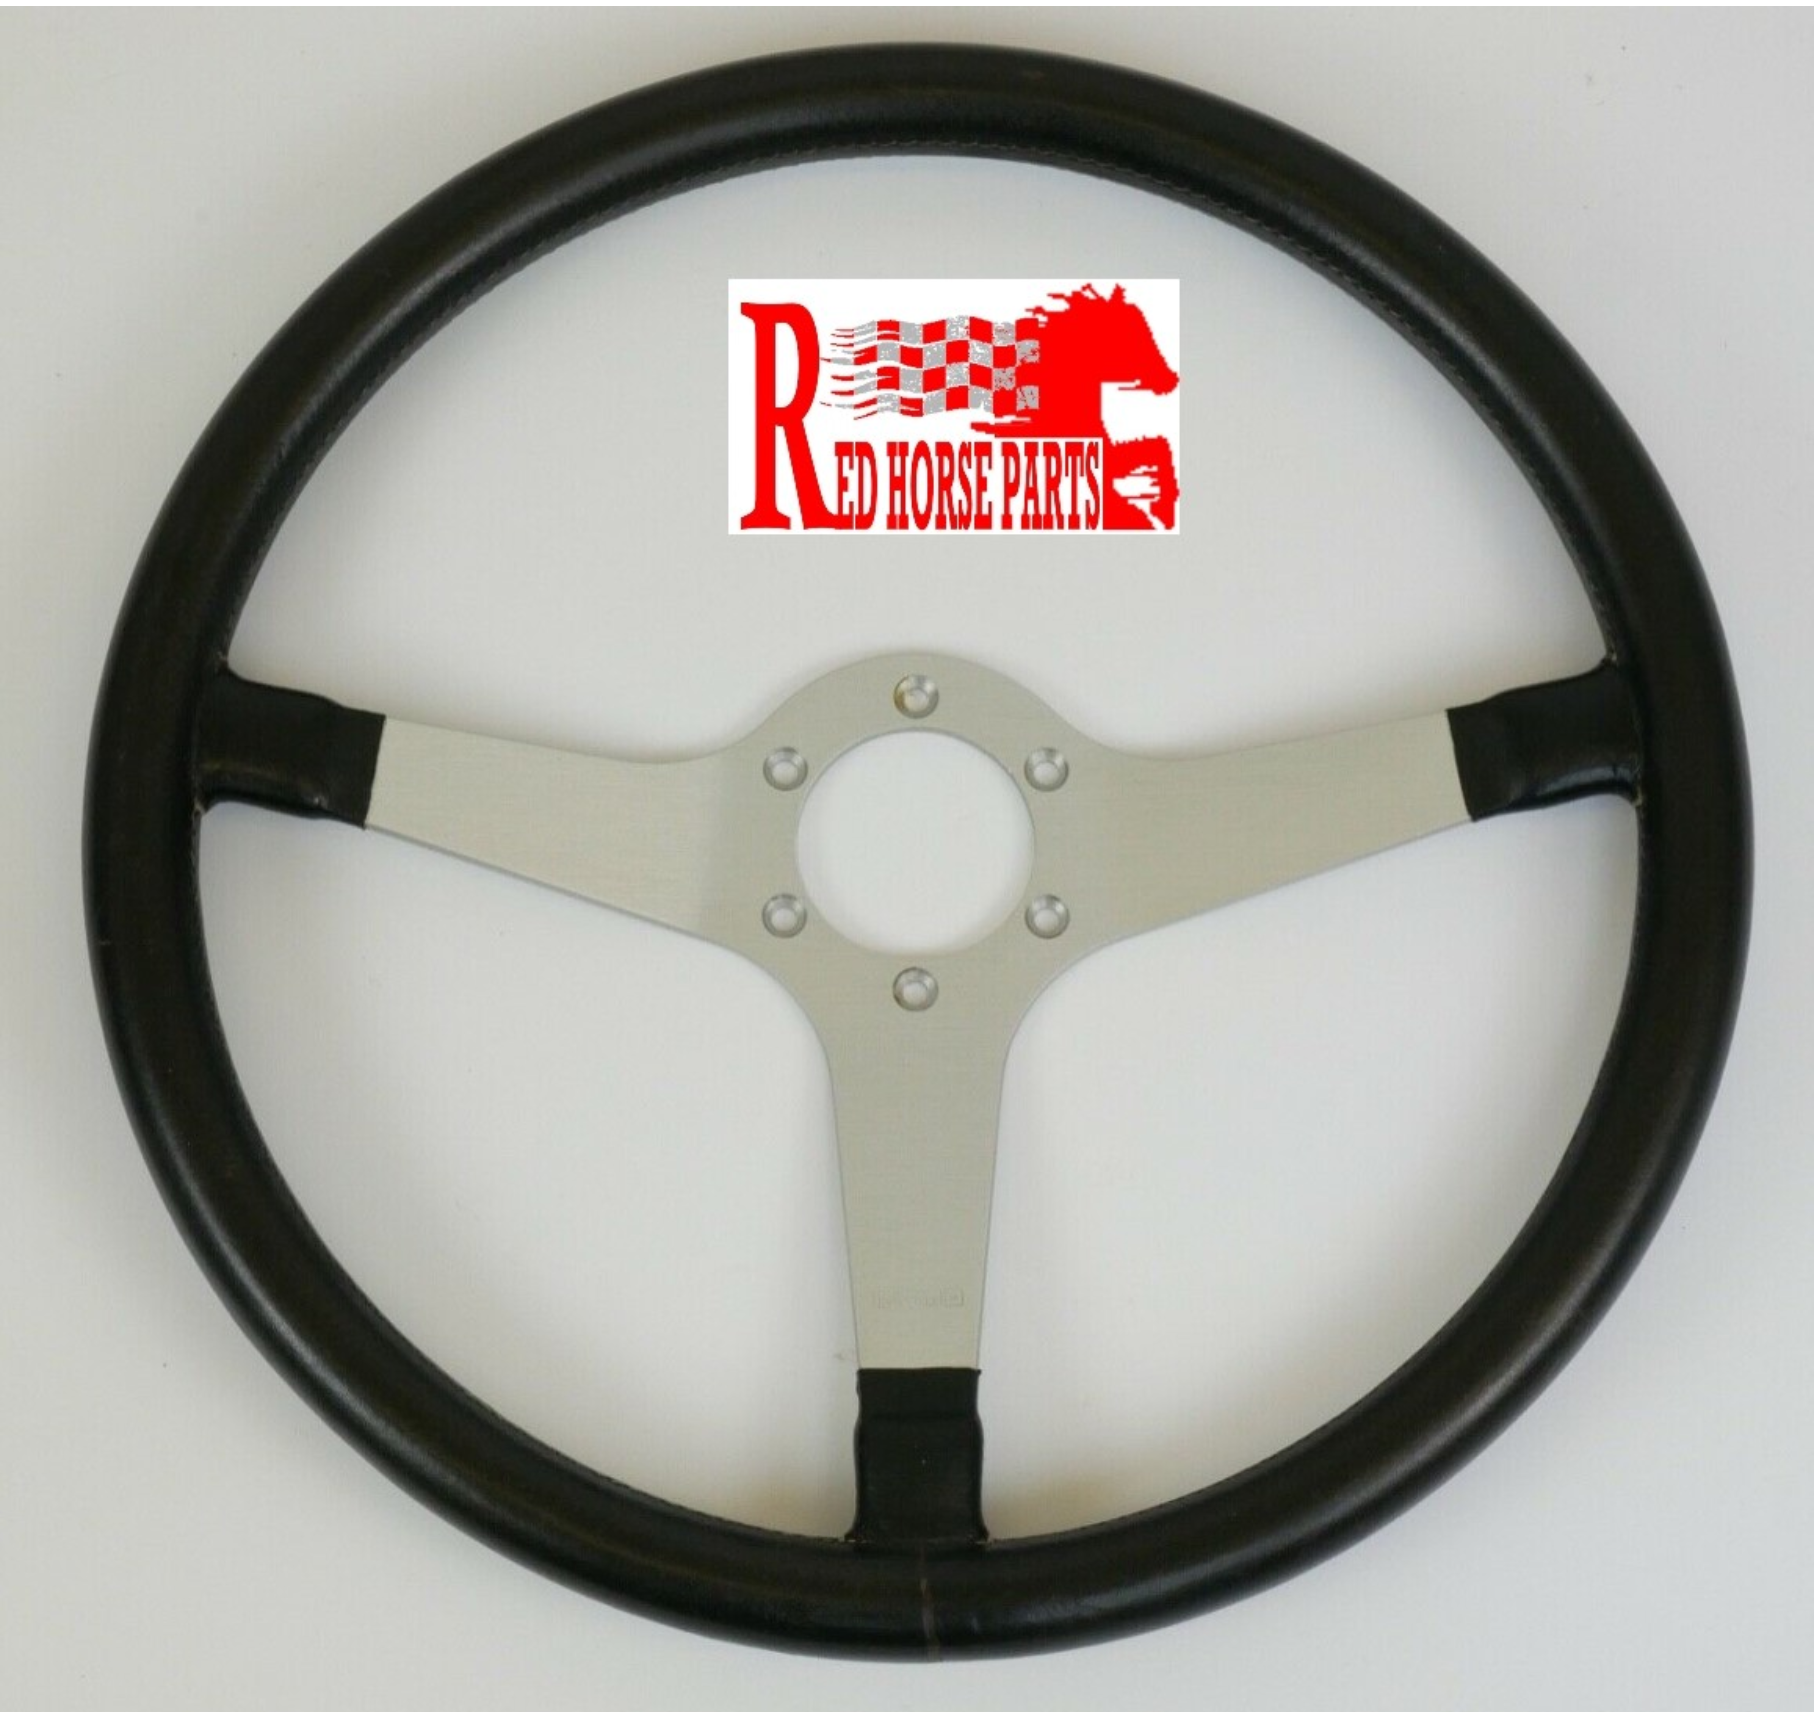 Ferrari 308 Steering Wheel